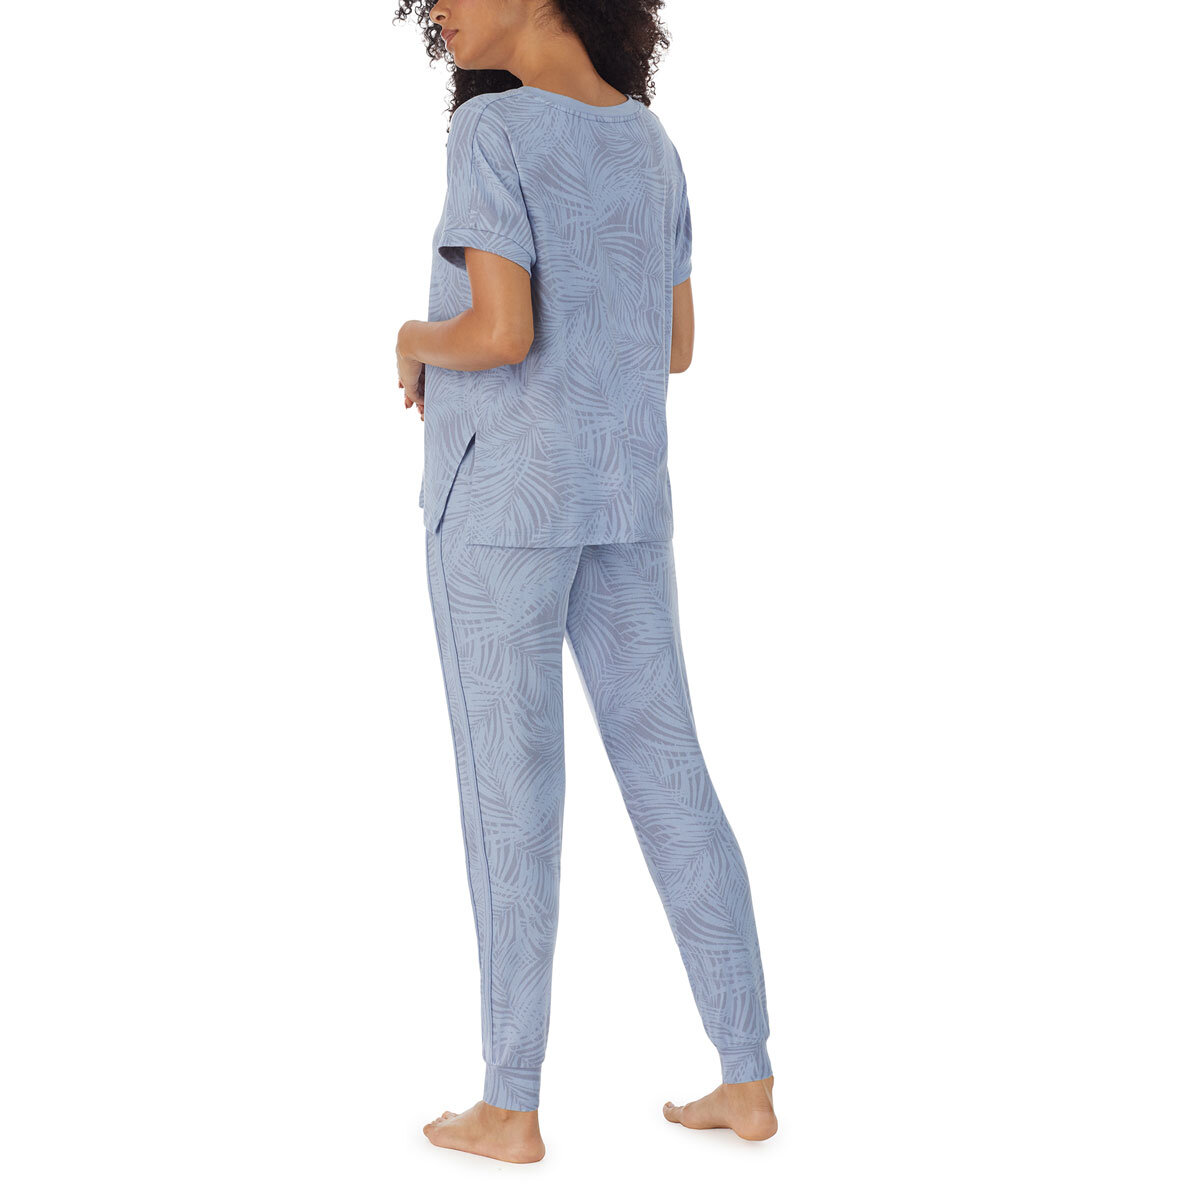 Carole Hochman Midnight Women's 2 Piece Super Soft Pajama Set (Tan, S)